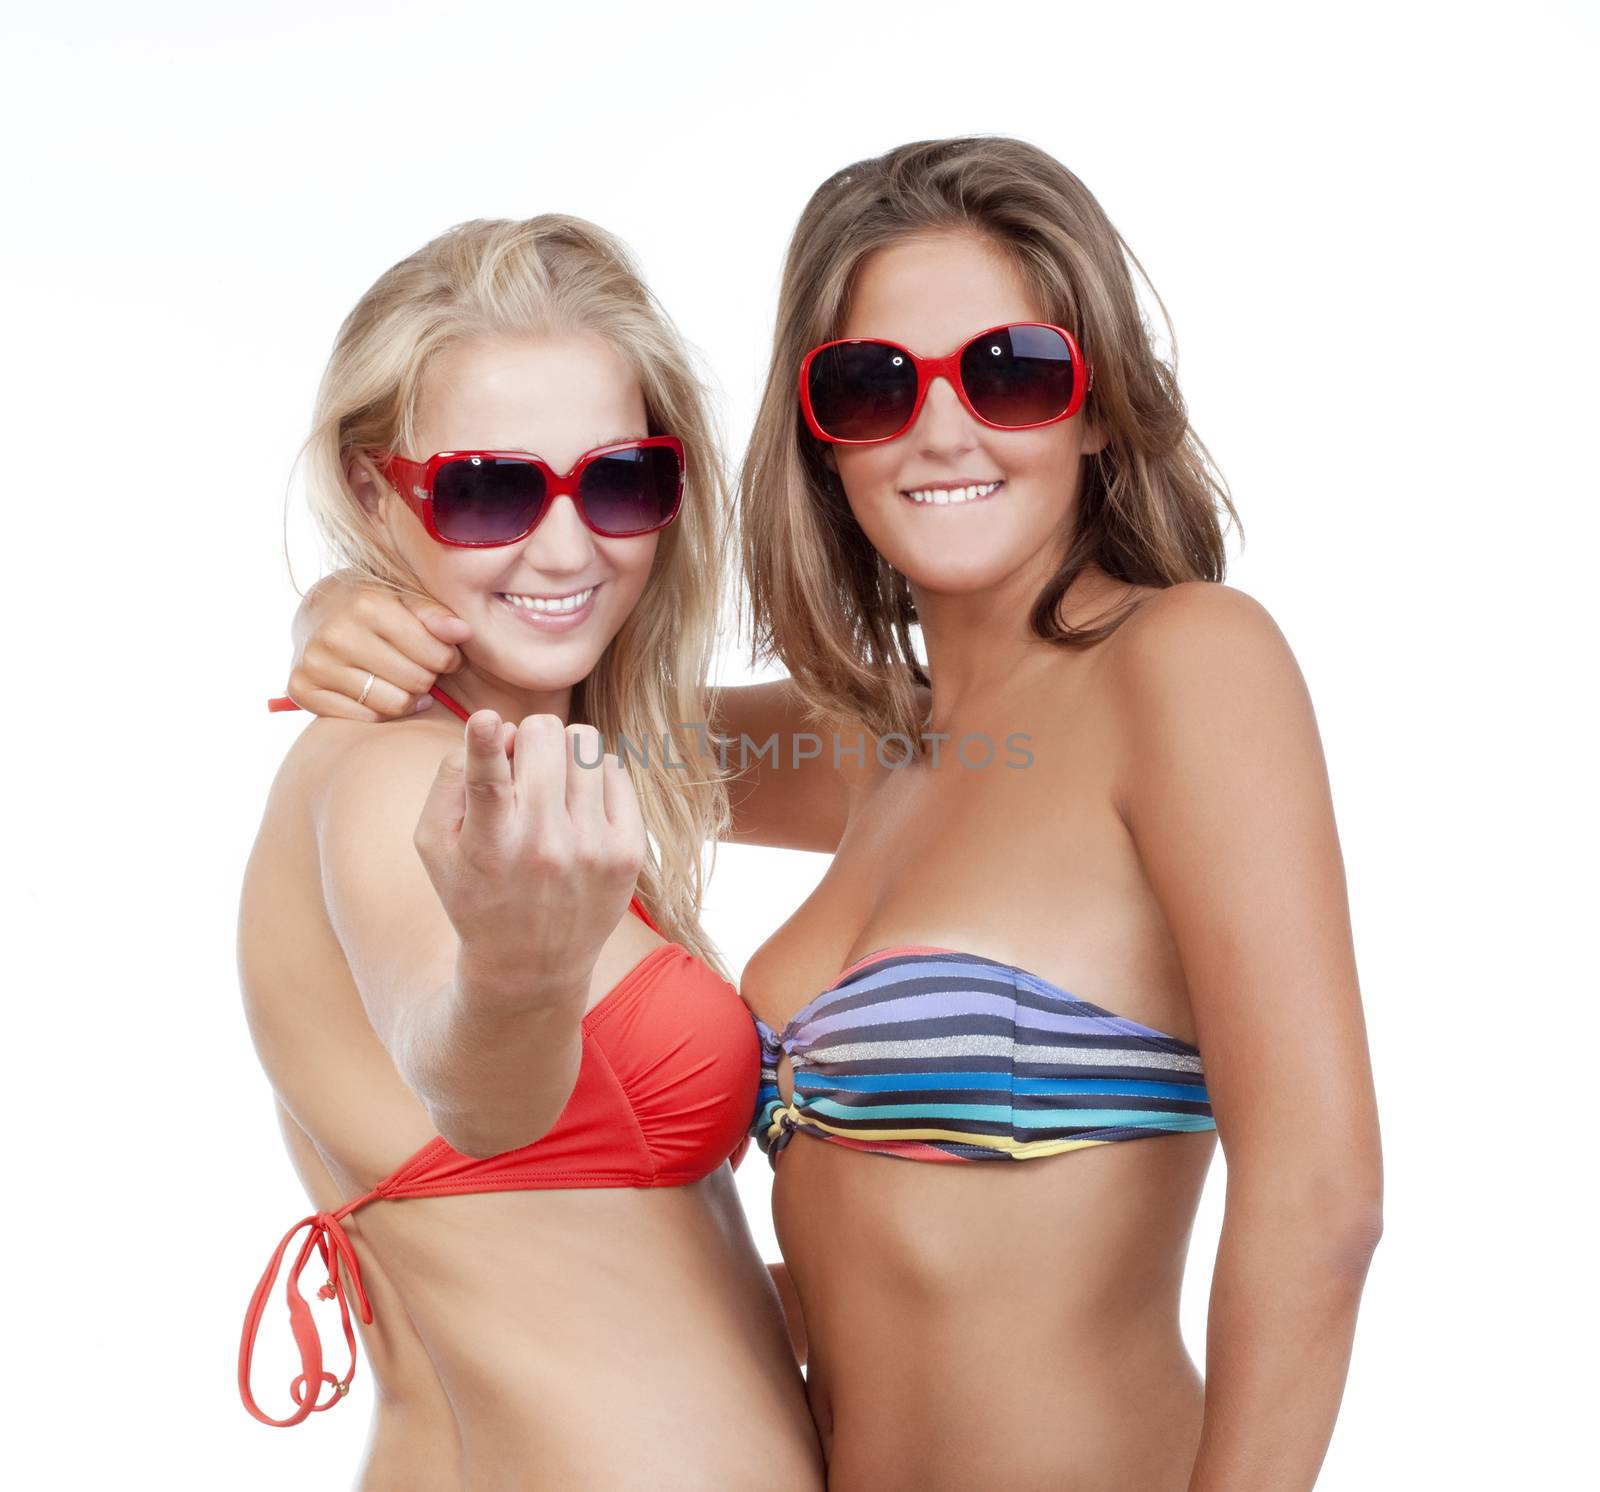 girls in bikini tops showing come on gesture by courtyardpix